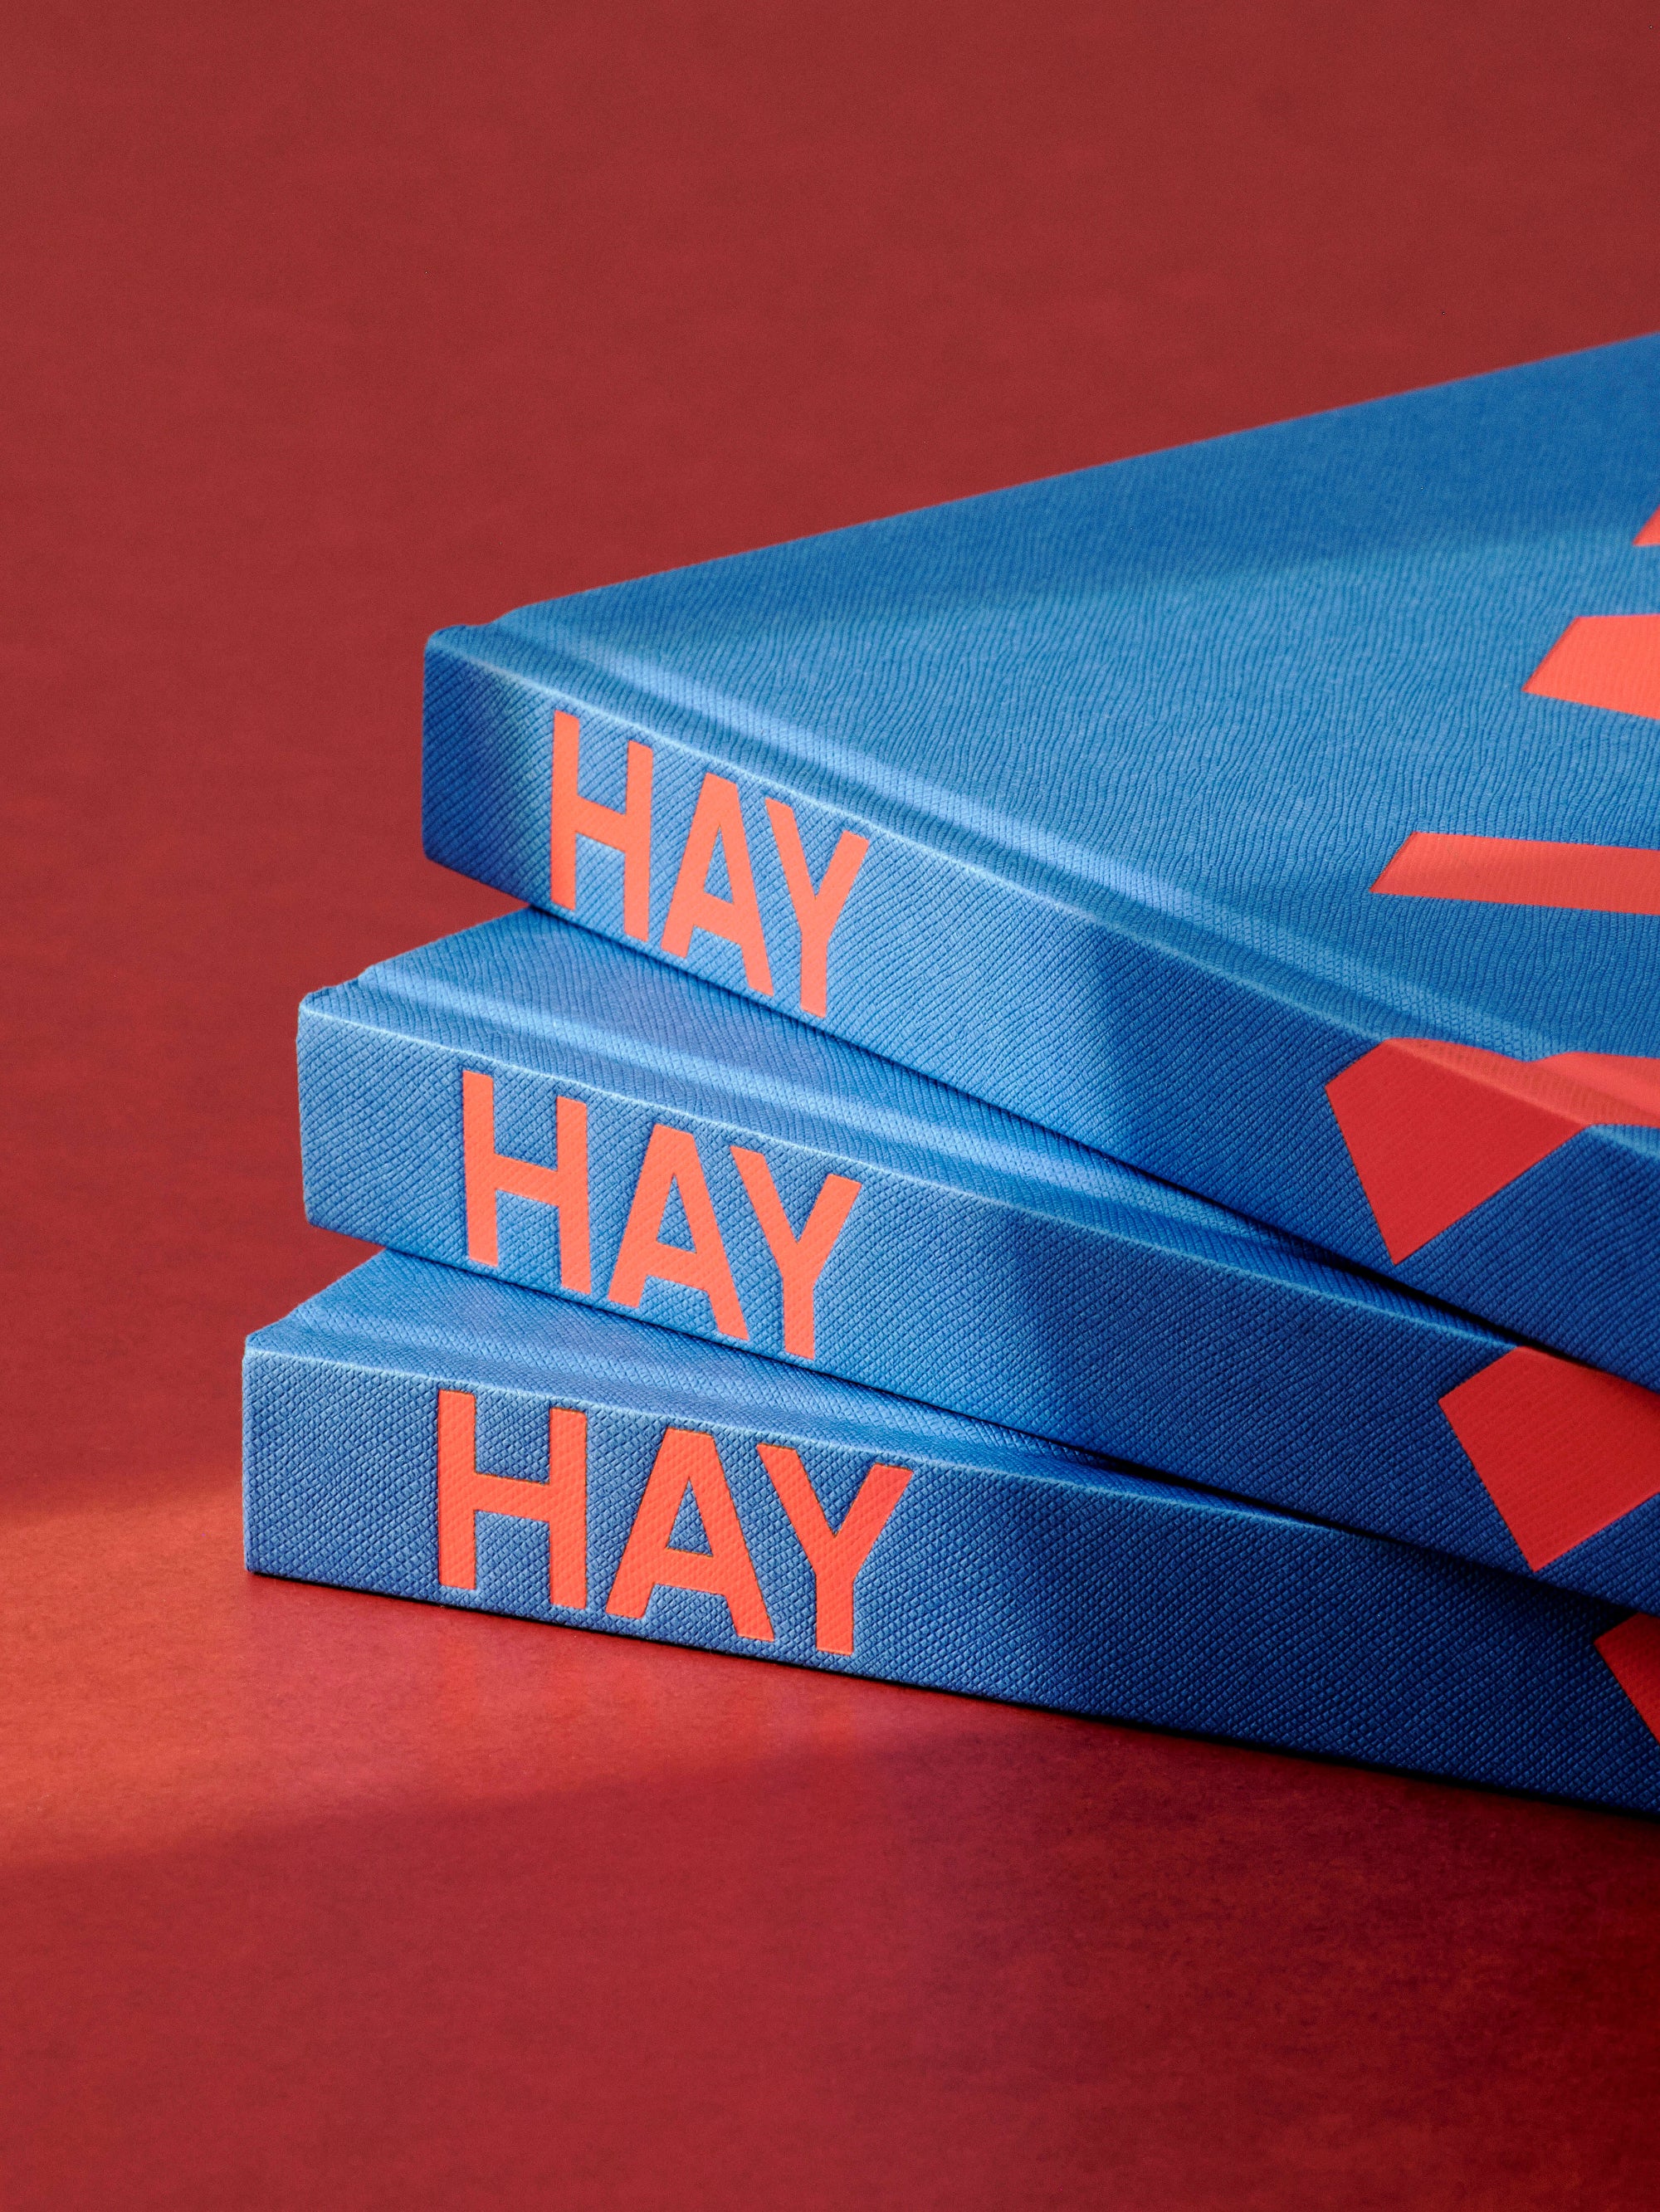 HAY Phaidon Book | by HAY - Lifestory - HAY